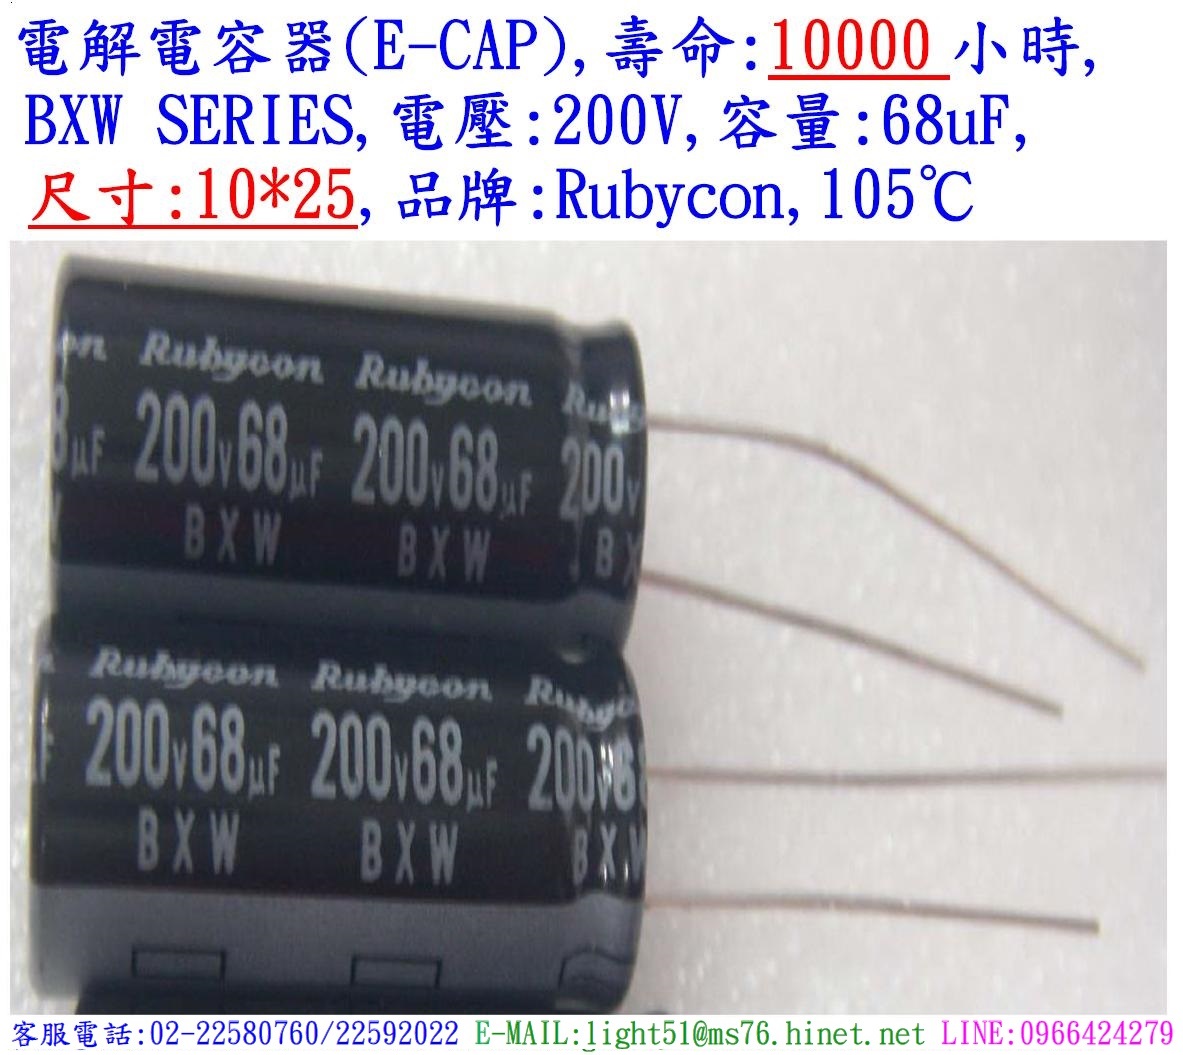 BXW,200V,68uF,尺寸:10*25,電解電容器,壽命:10000小時,Rubycon